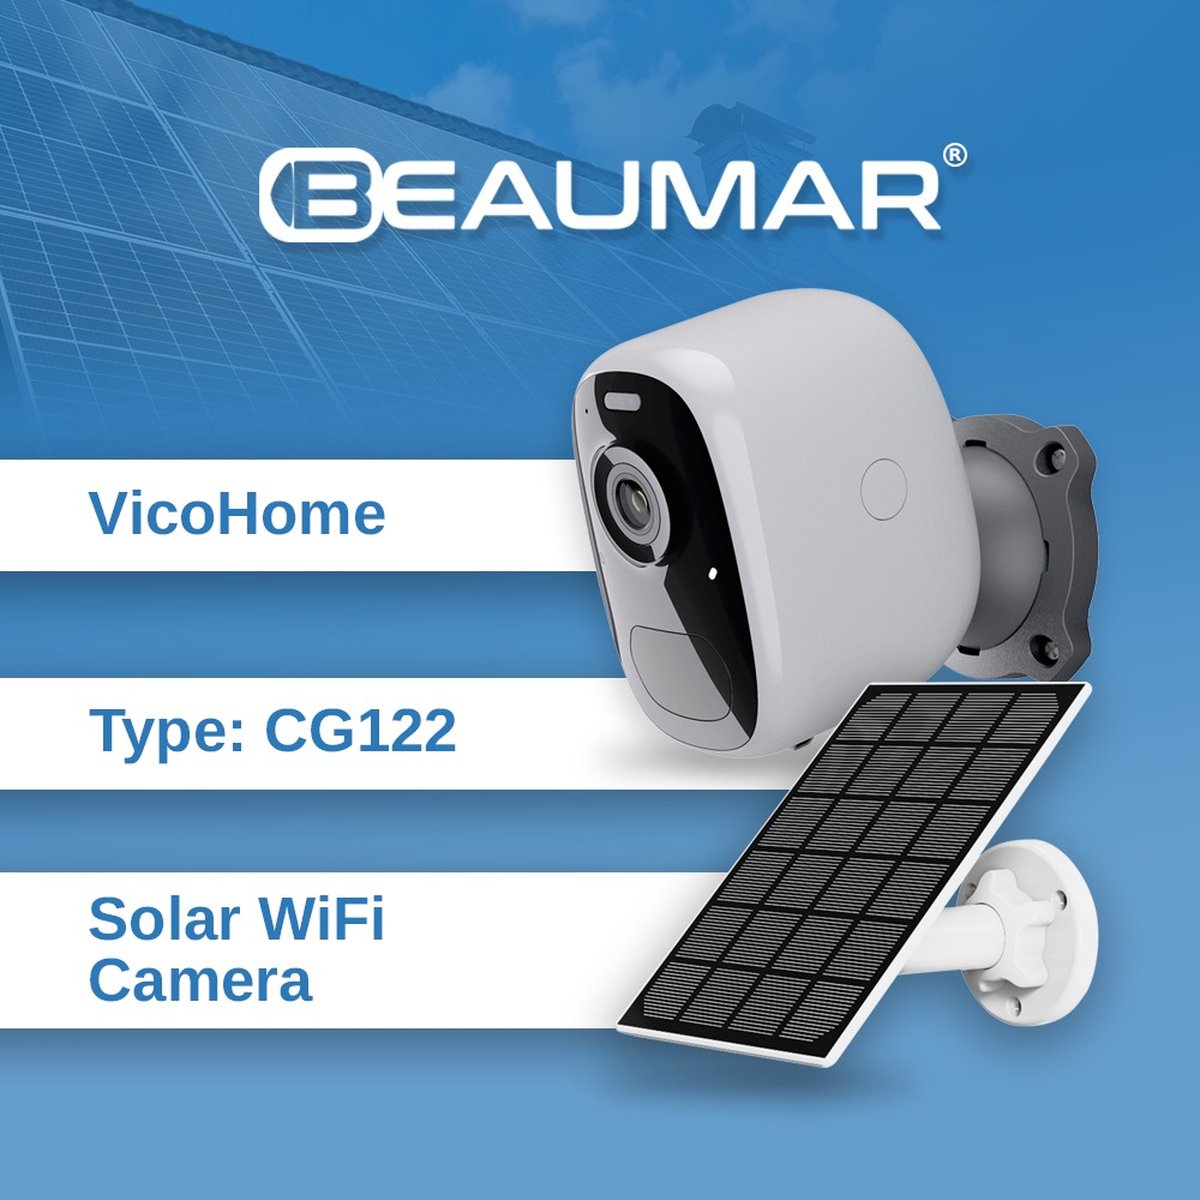 Beaumar ® vicohome CG122 outdoorcamera + Zonnepaneel - gratis cloud opslag - accu camera - wifi camera - beveiligingscamera - 3 jaar garantie - camera beveiliging draadloos wifi - 5200mah - eufy